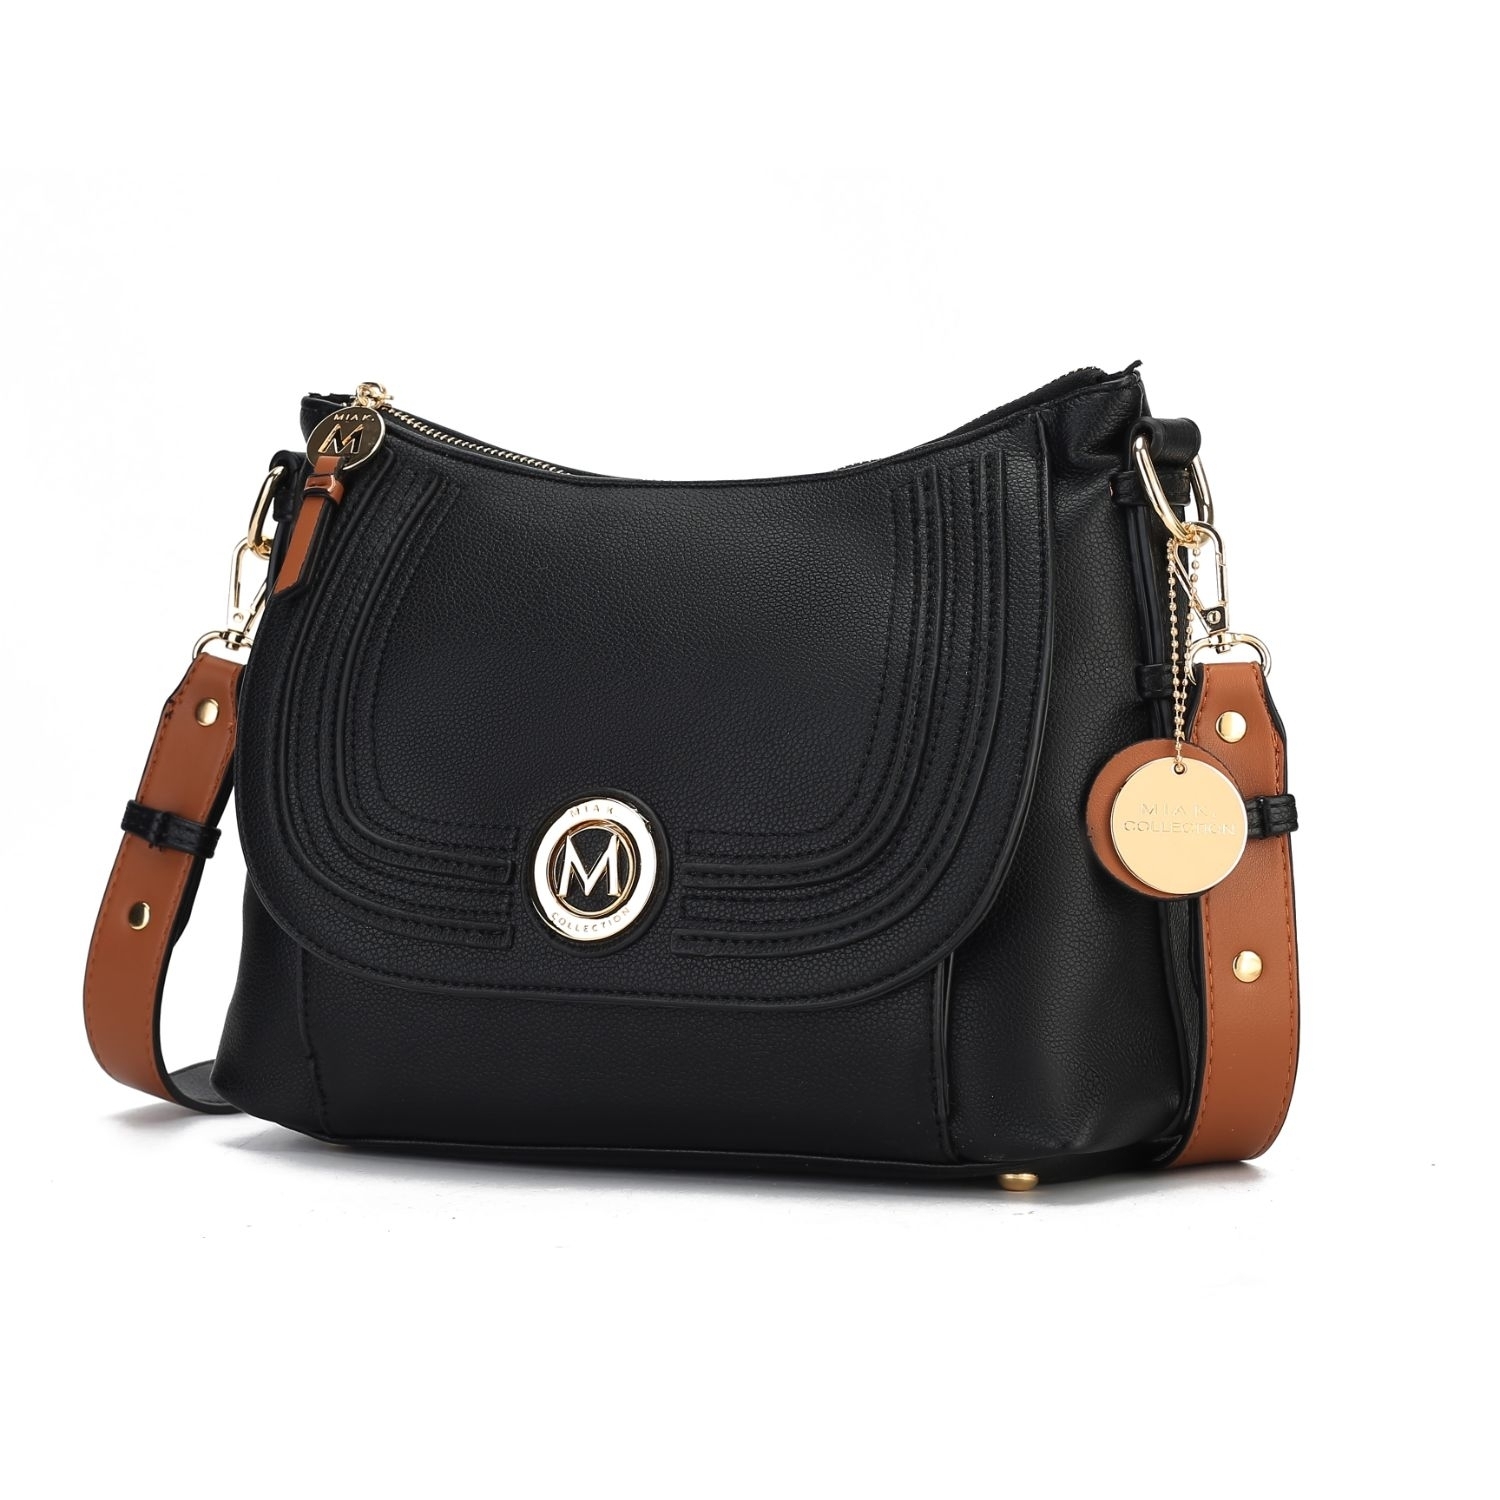 MKF Collection Maggie Crossbody Handbag By Mia K. - Blue Denim